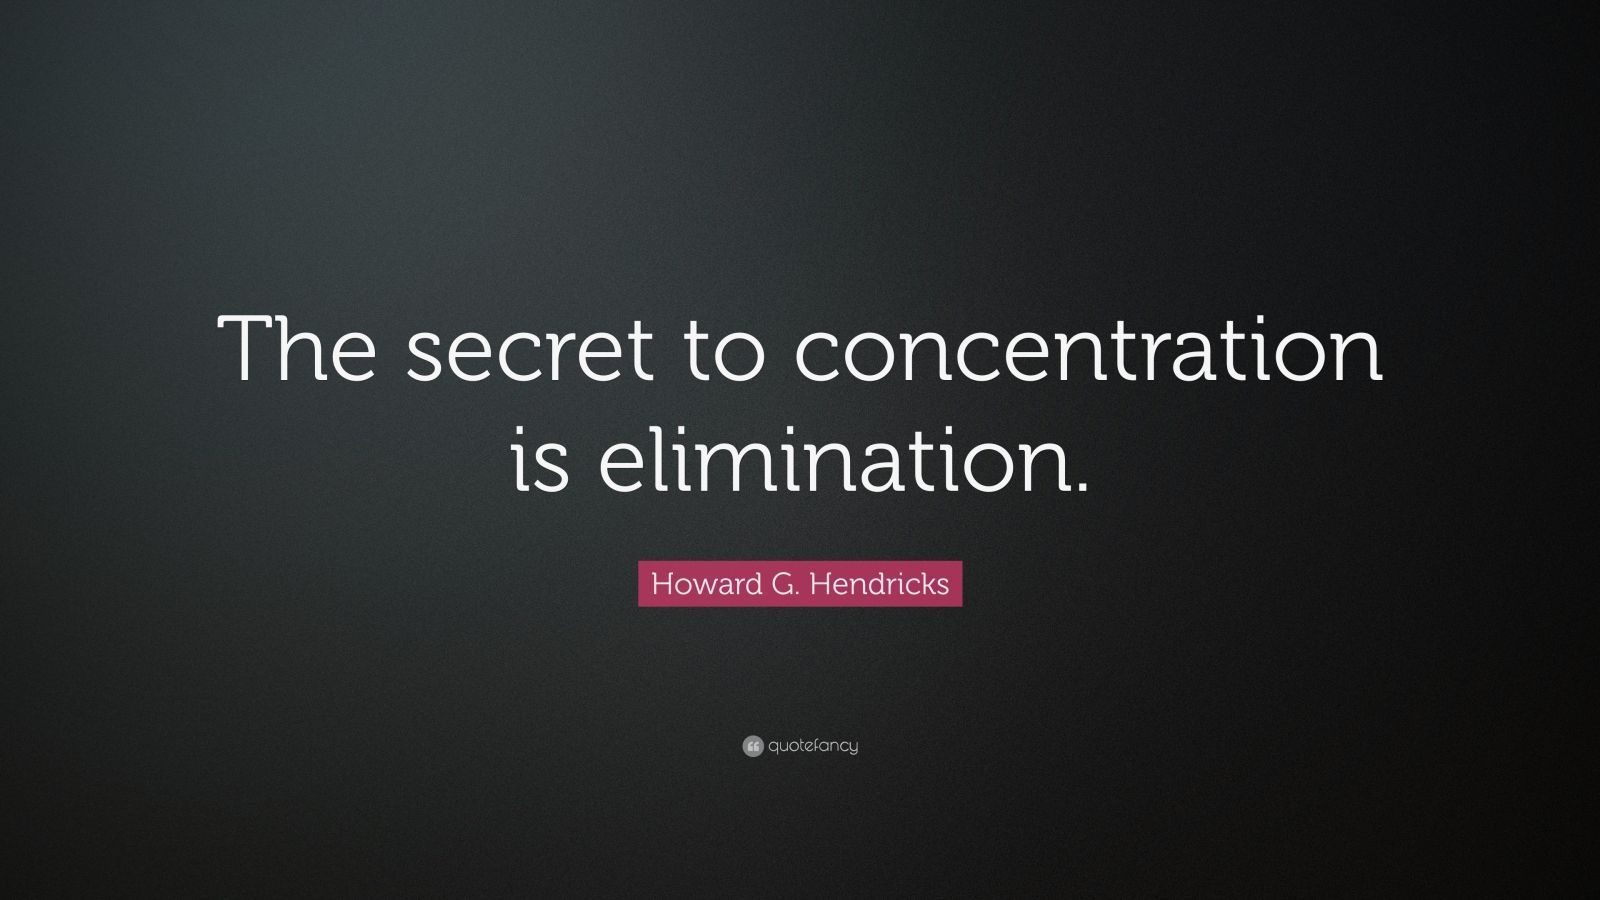 Howard G. Hendricks Quote: “The secret .quotefancy.com